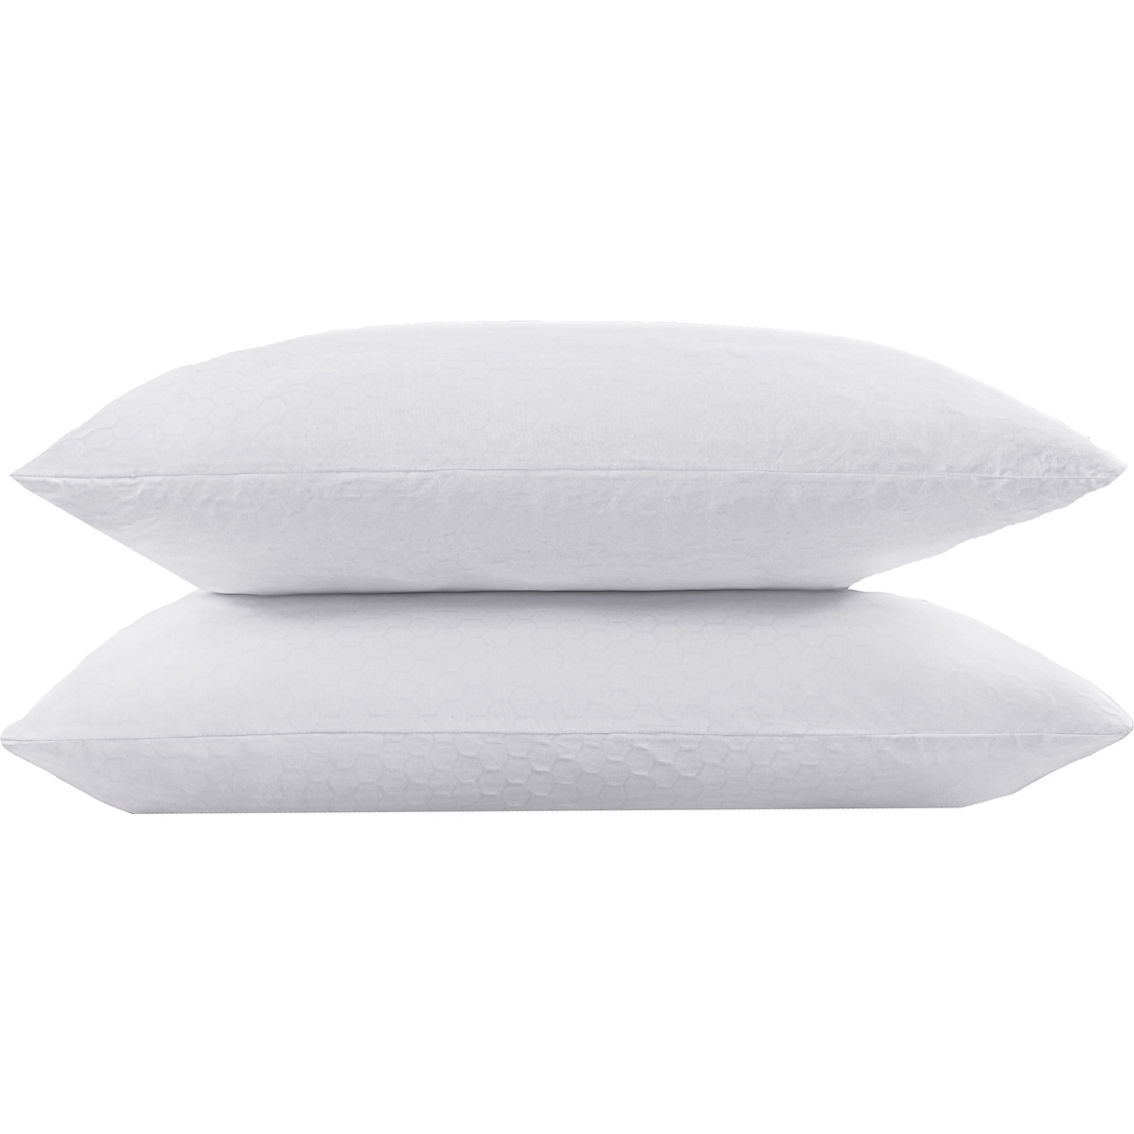 Serta Power Chill Down Alternative Pillows Soft/Medium Density 2 pk. - Image 4 of 6